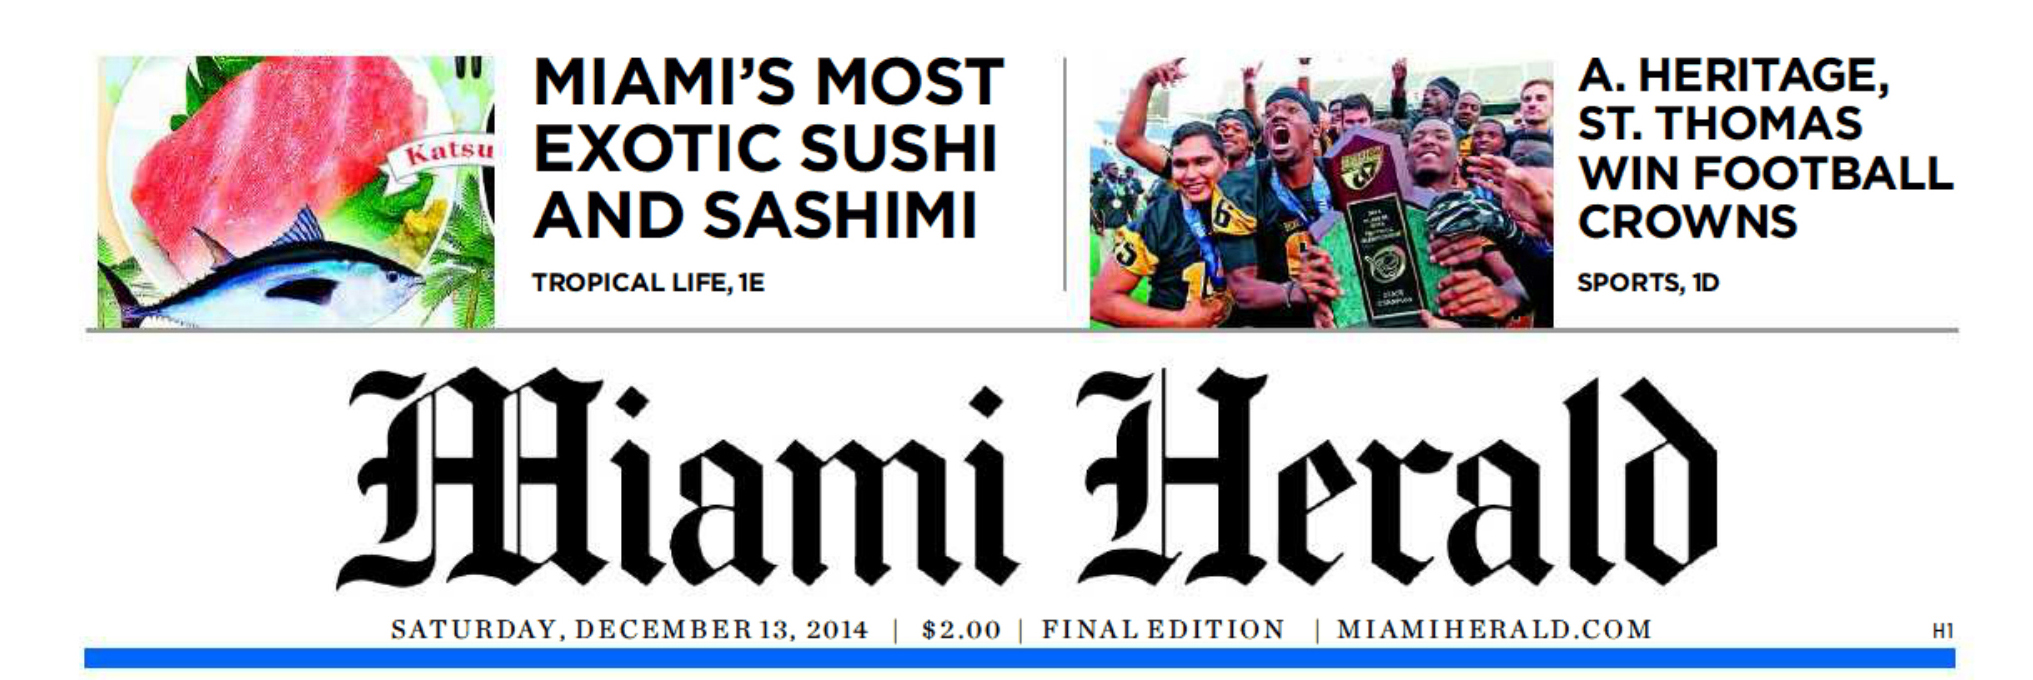 Miami's Most Exotic Sushi and Sashimi, Miami Herald